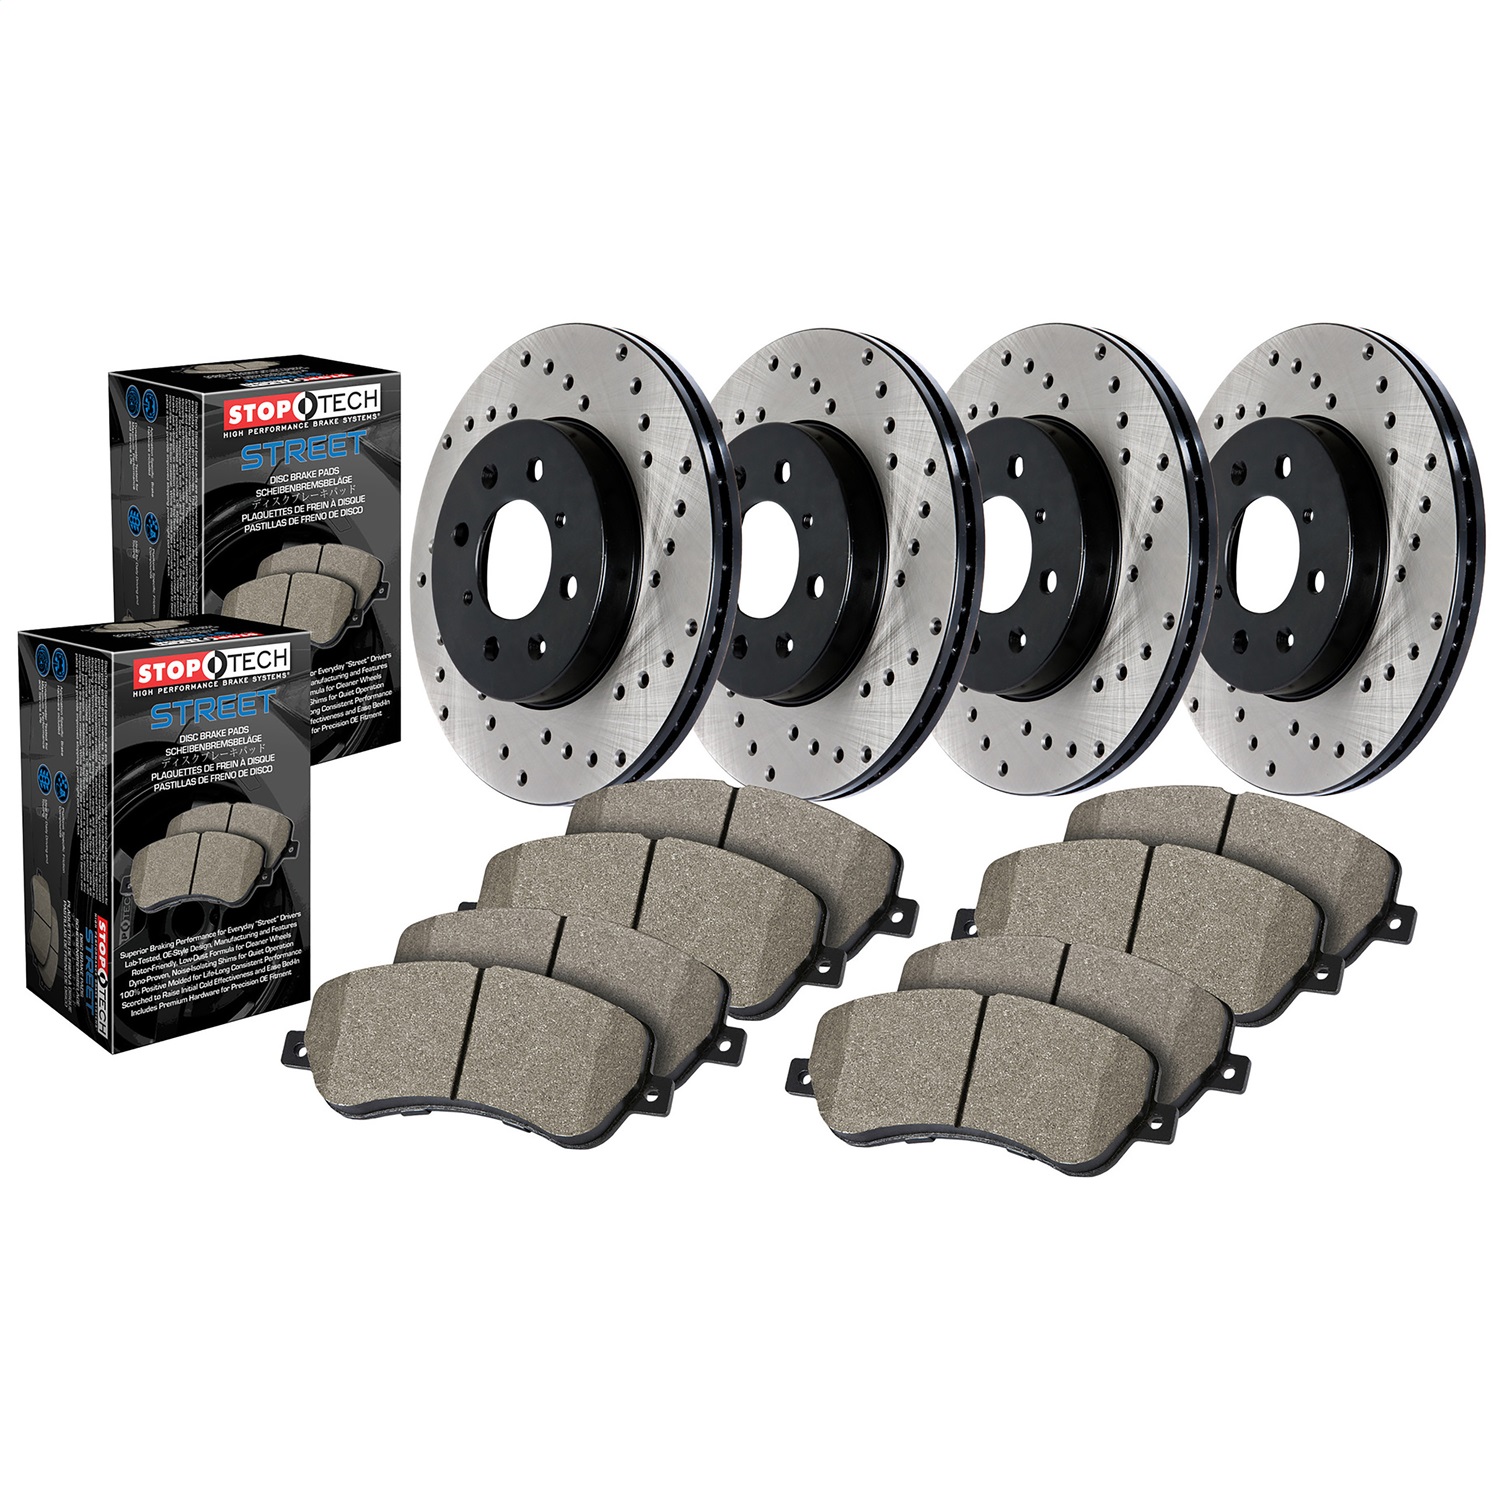 StopTech 936.40042 Street - 4 Wheel Disc Brake Kit w/Cross-Drilled Rotor